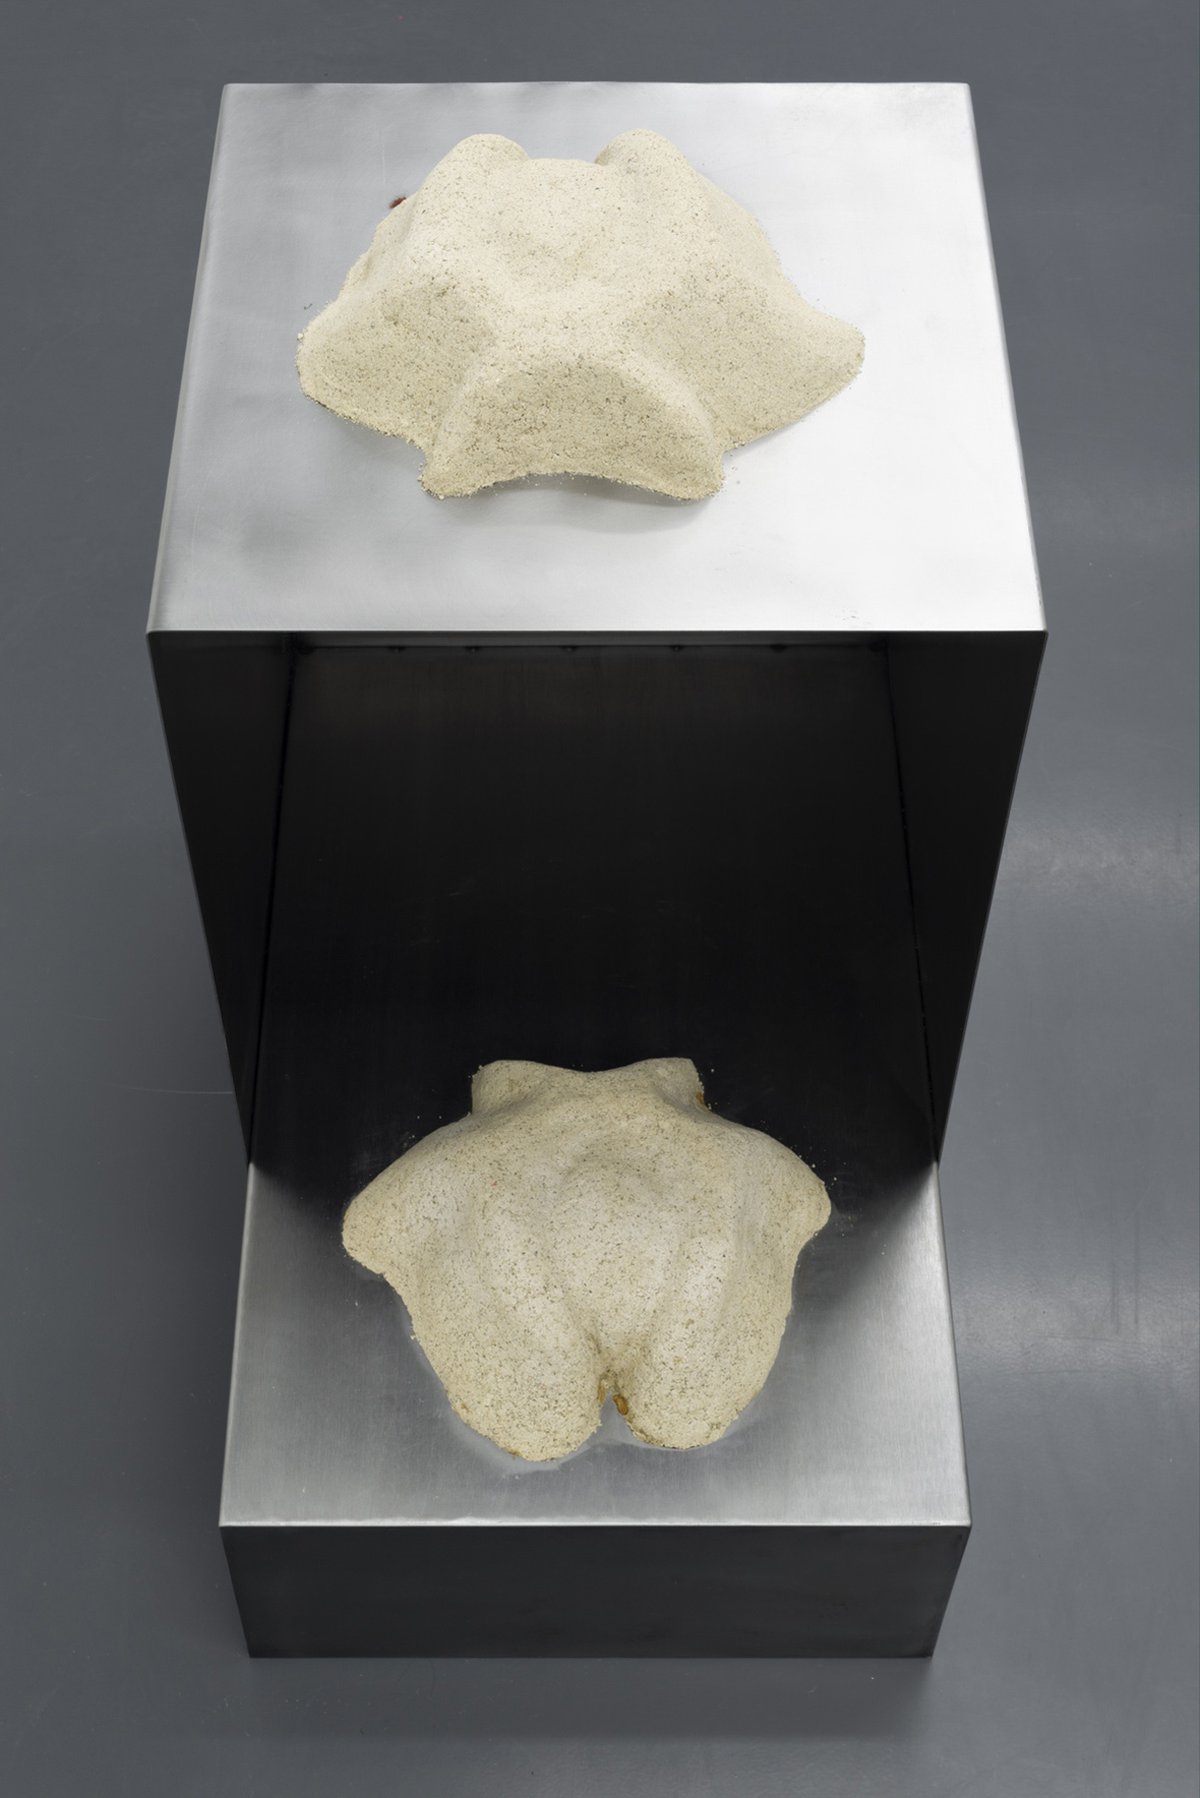 Lena HenkeEure Frankfurter Küche, 2016Metal, sand, silicone, fiberglass, epoxy resin, rubber70 x 70 x 45 cmDetail view